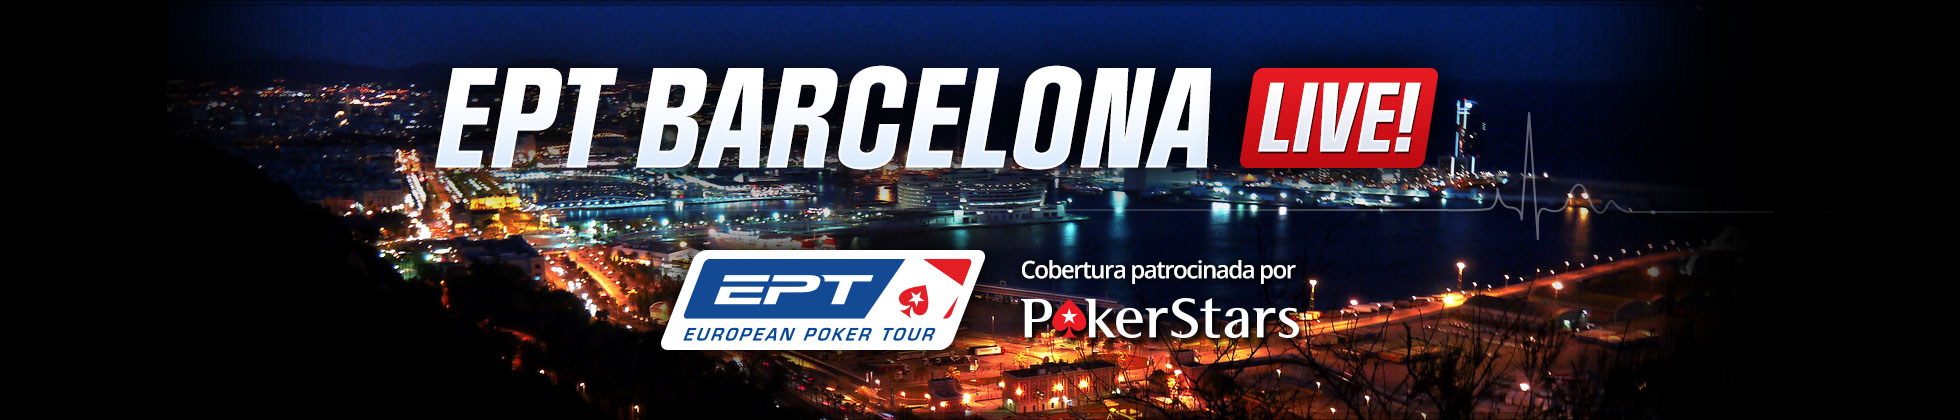 European Poker Tour Barcelona 2013